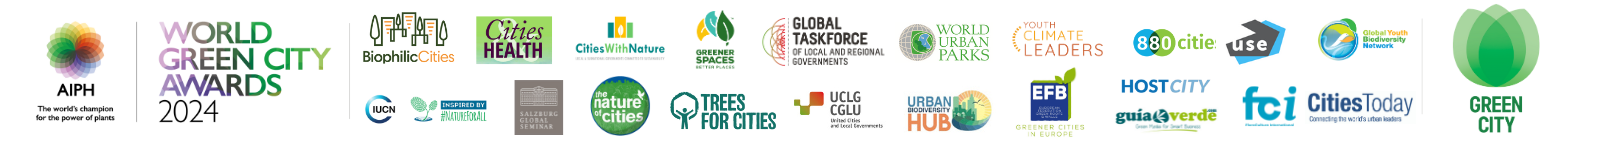 AIPH World Green City Awards 2024 partners